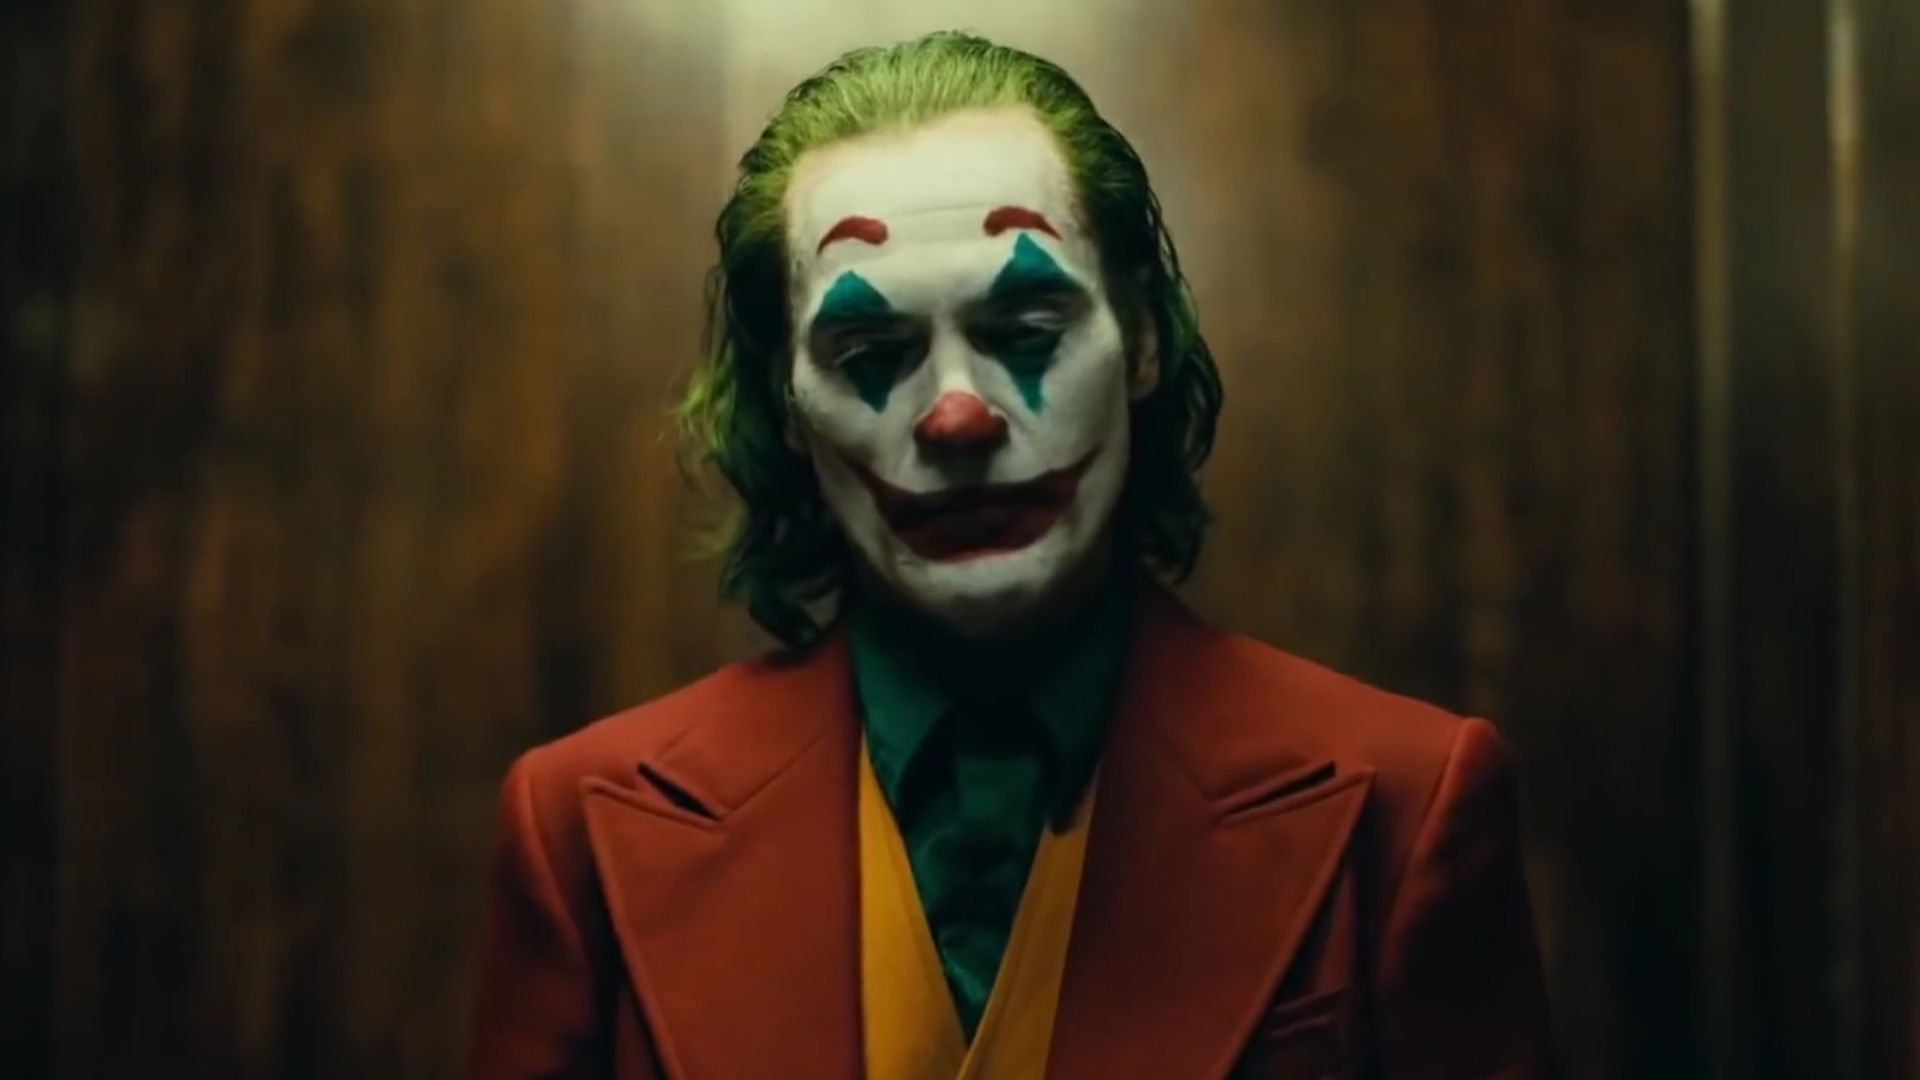 DC《小丑》勇夺金狮奖！超英类型片创造威尼斯电影节的新历史！
		
	
    
        Joker